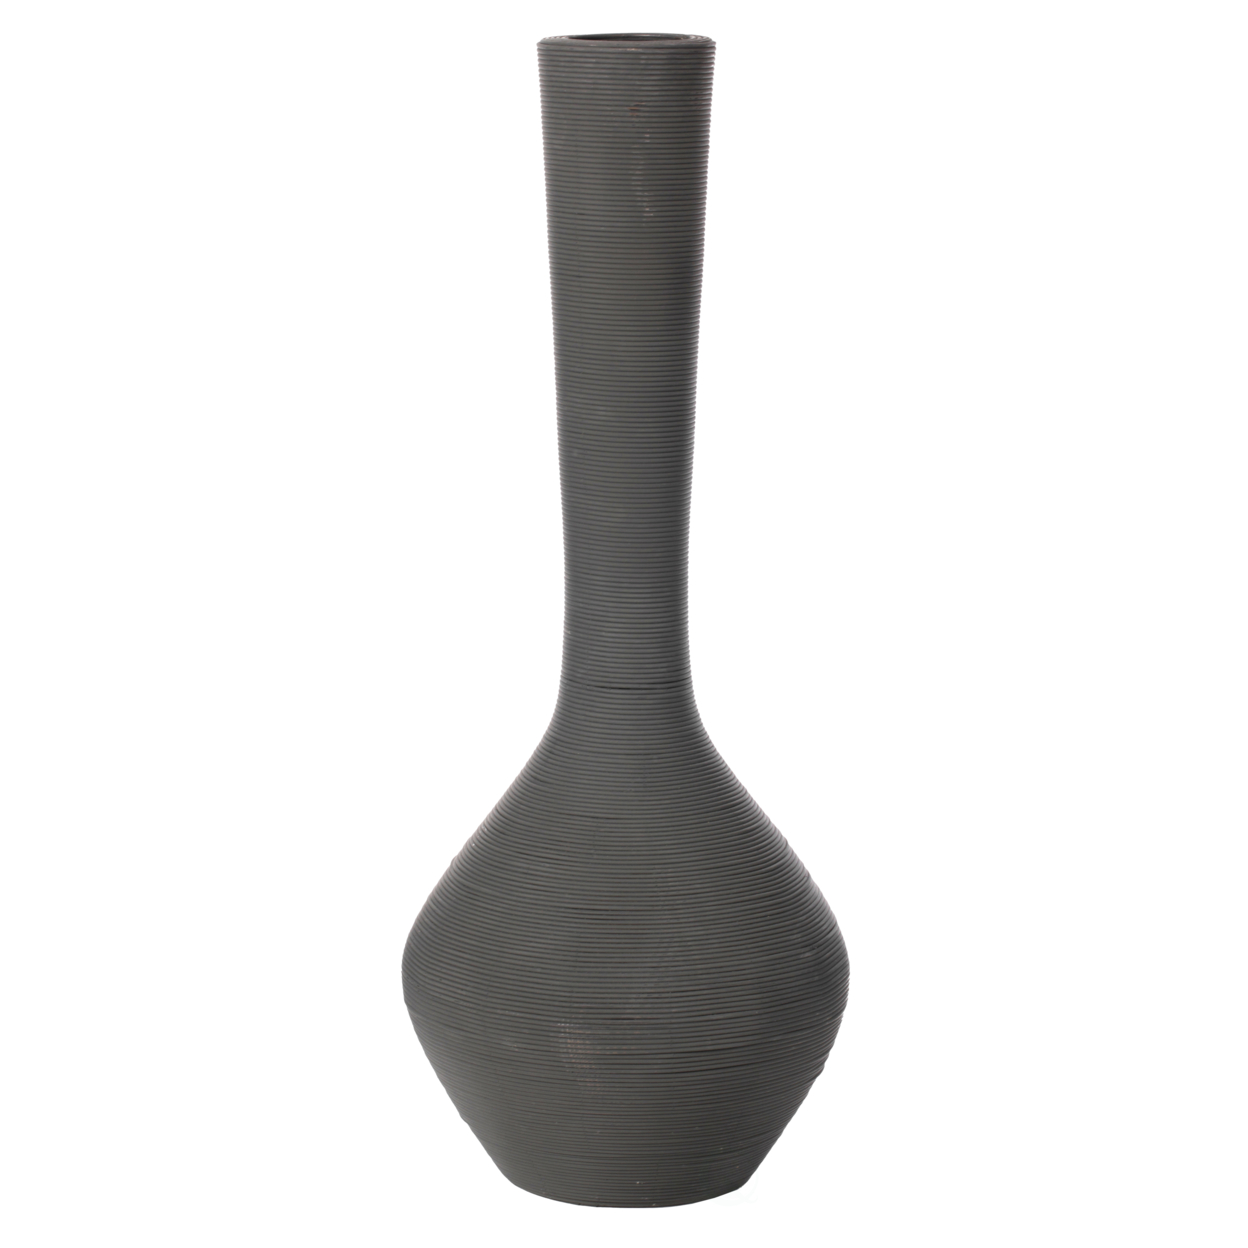 Tall Floor Vase, Modern Charcoal Grey Extra Large Floor Vase, 38-inch Trumpet Style Plastic Rope Vase, Decorative Lightweight Vase